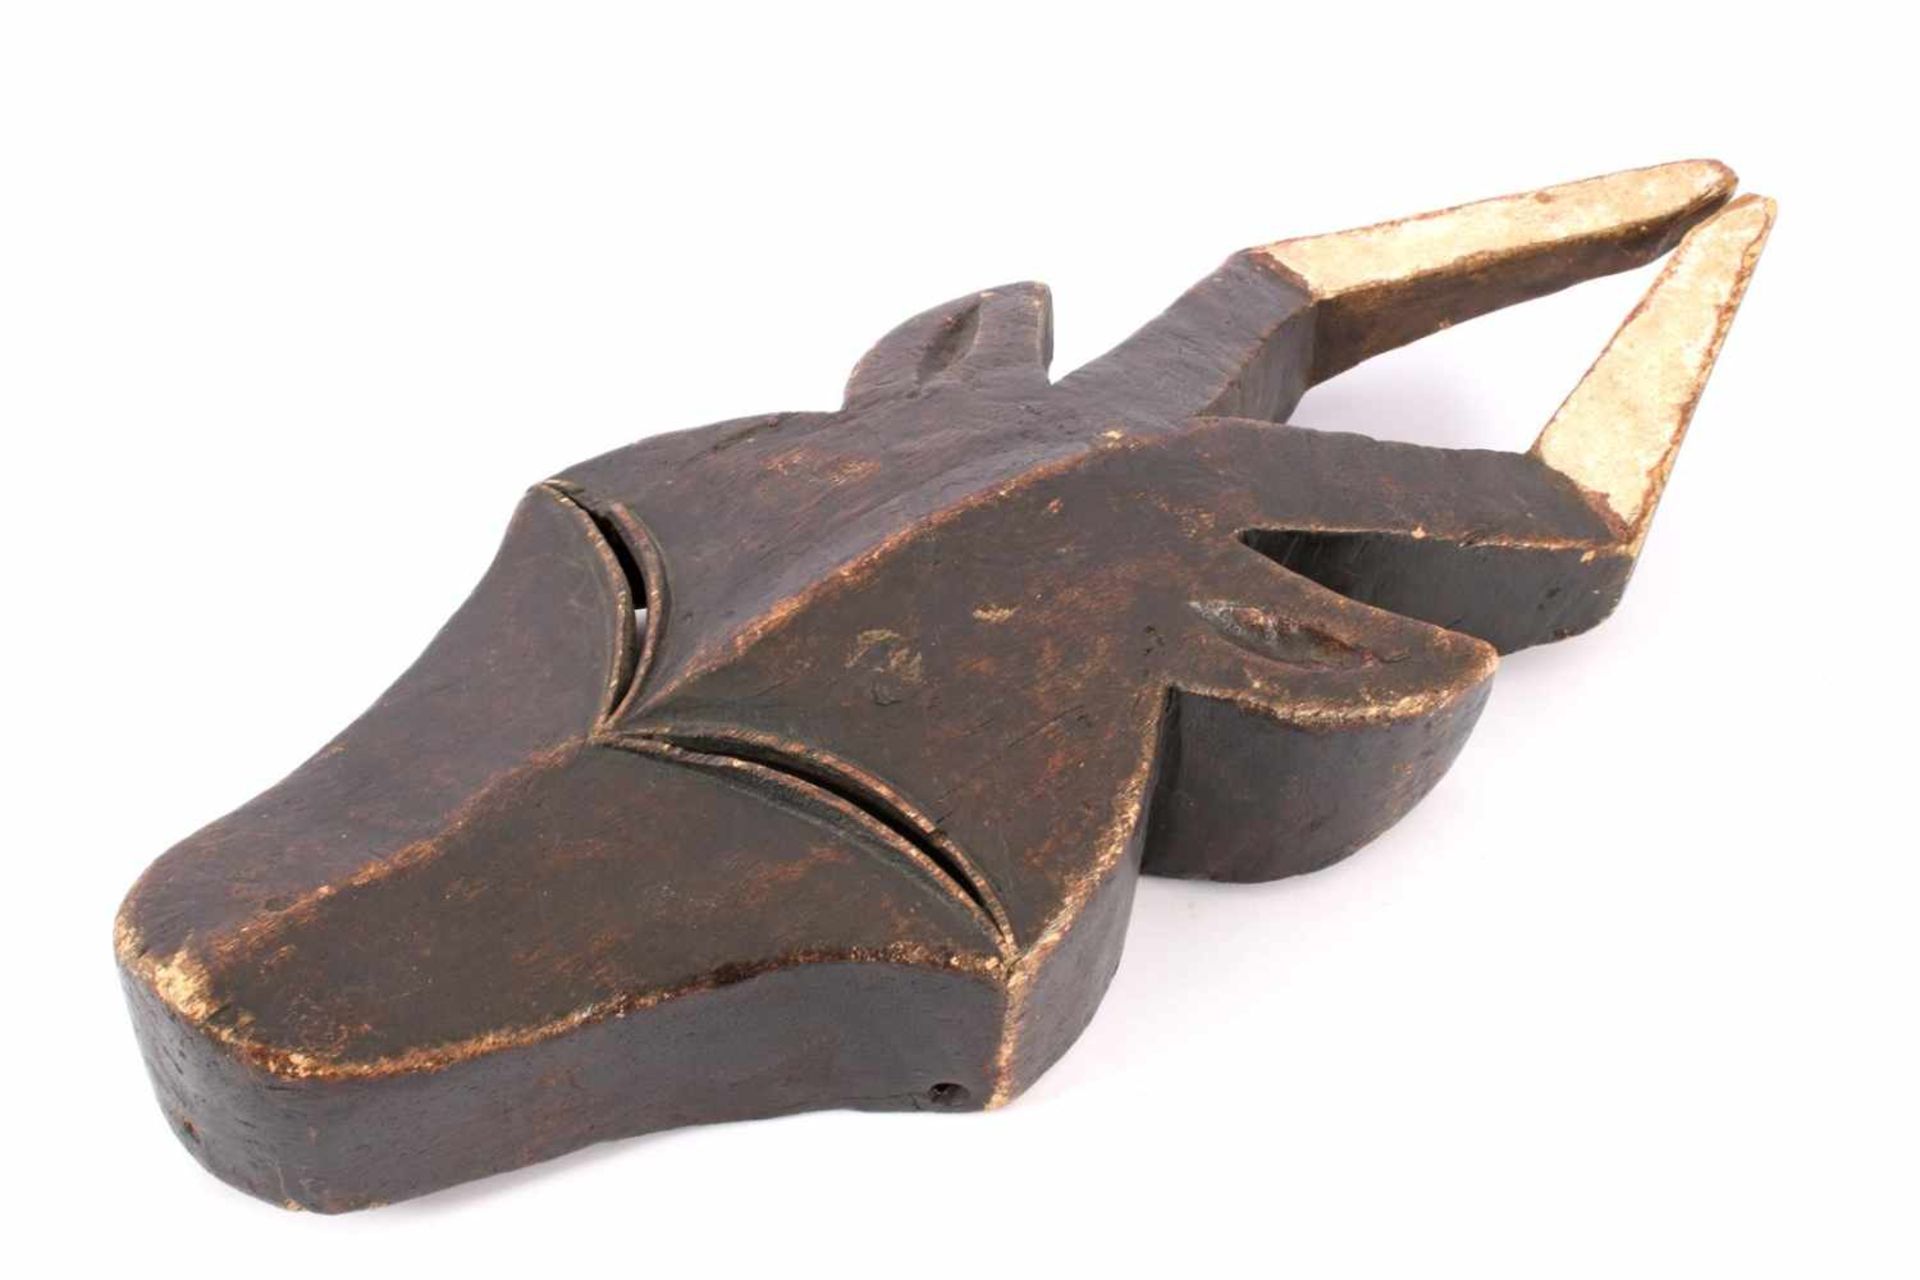 Houten antilopemasker, Ivoorkust 52,5 cm hoog, 19 cm breed - Bild 3 aus 3